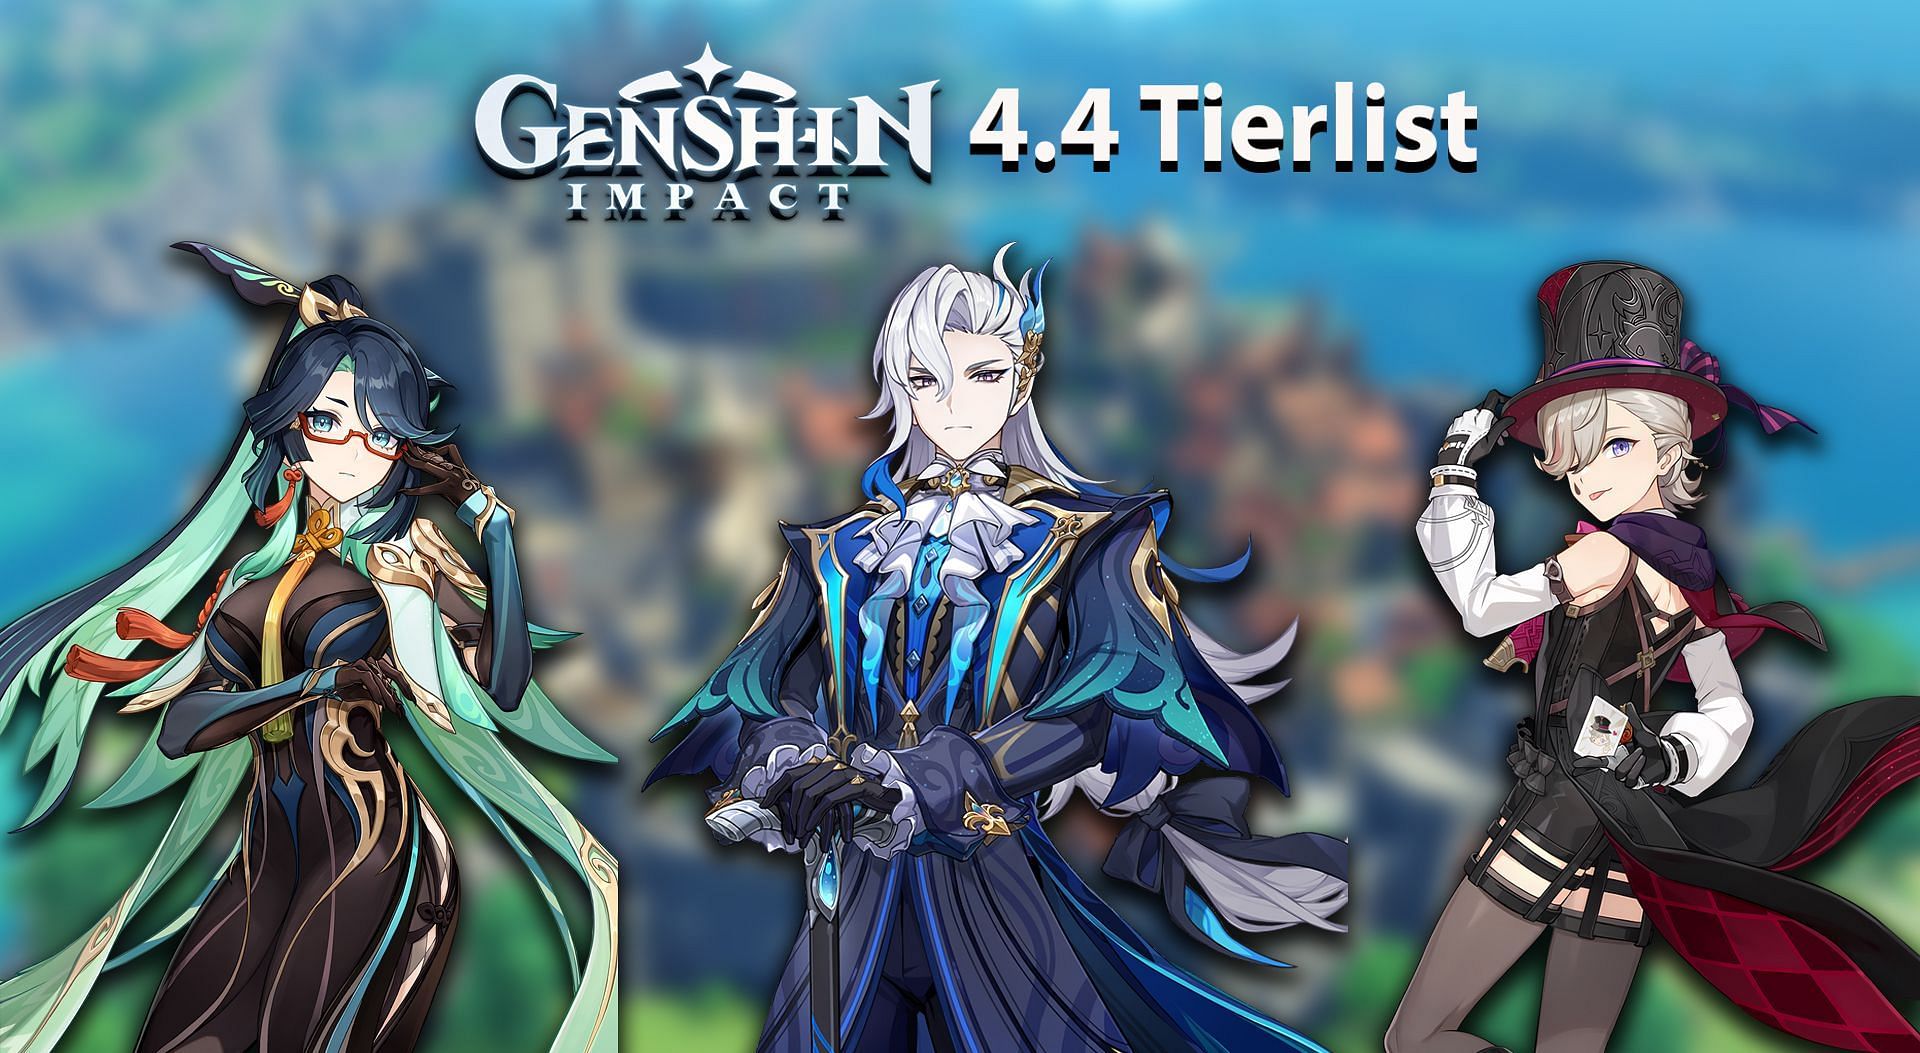 Genshin Impact 4.4 tier list